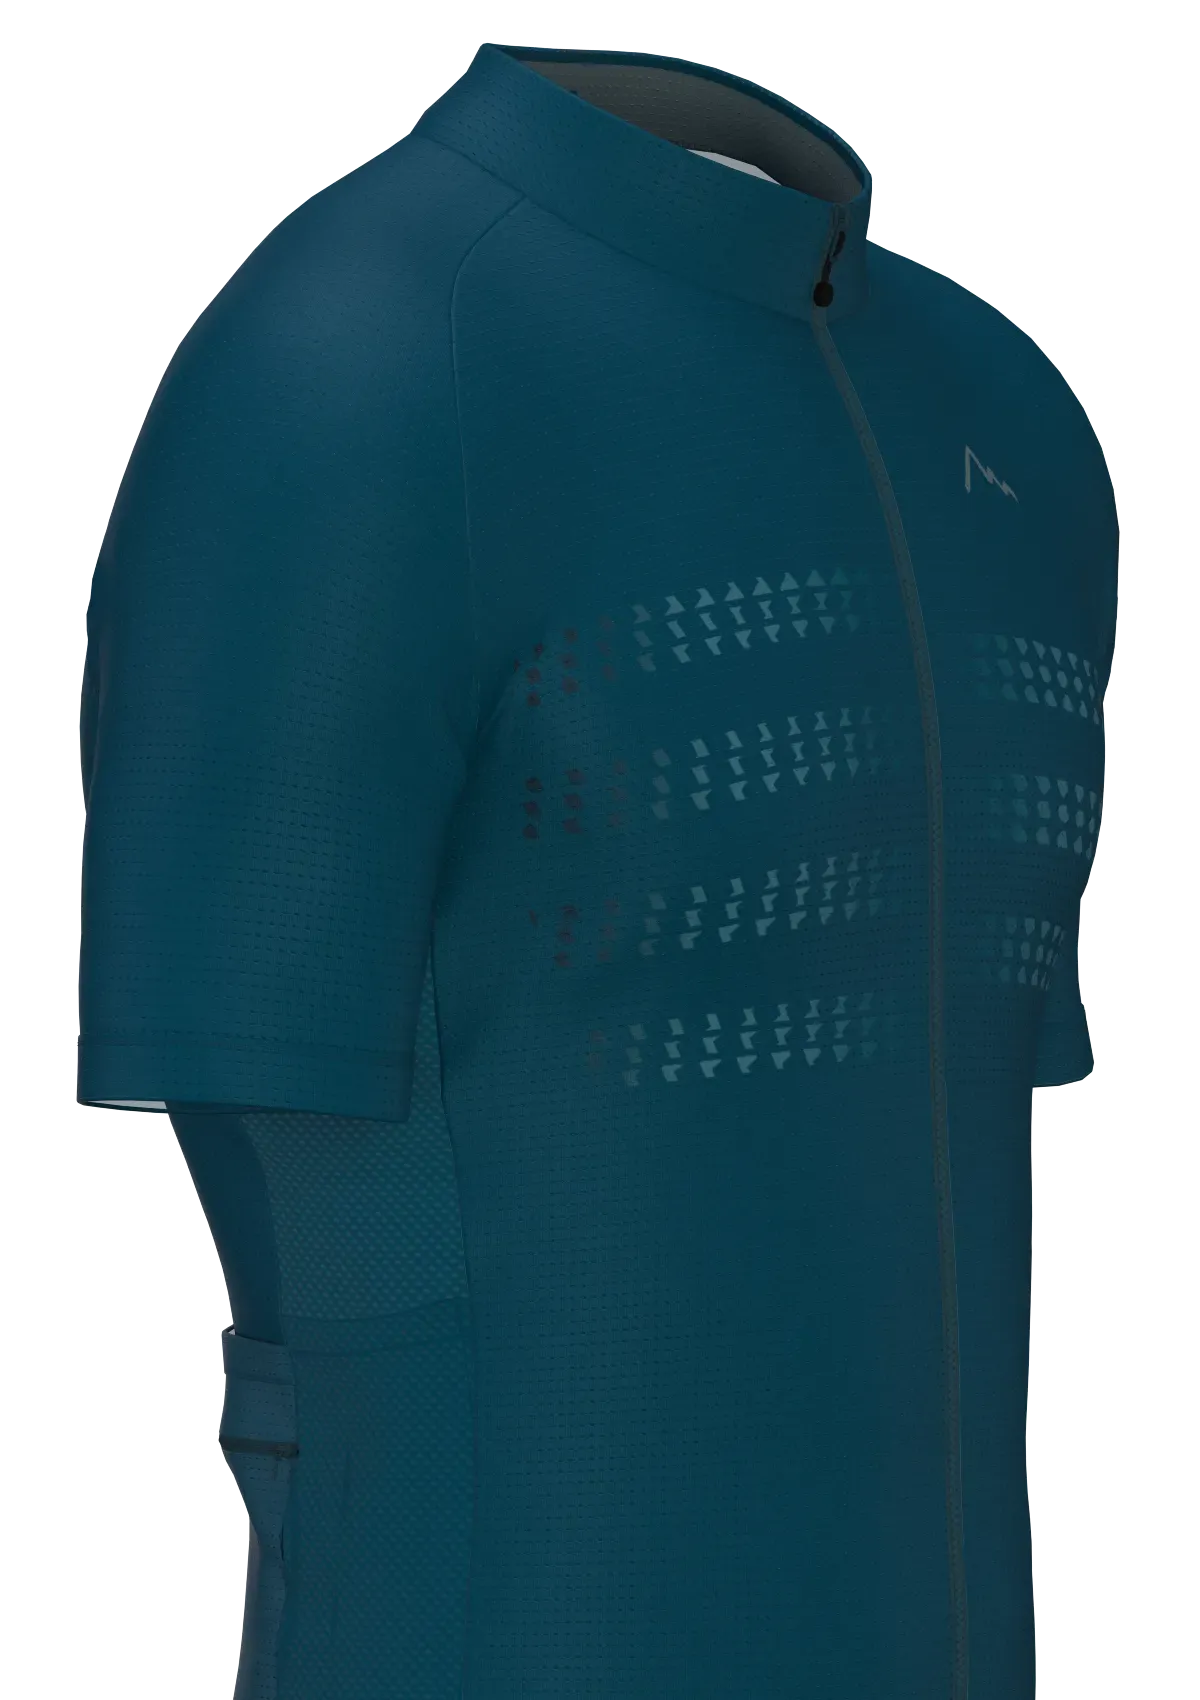 Regular navy blue cycling jersey